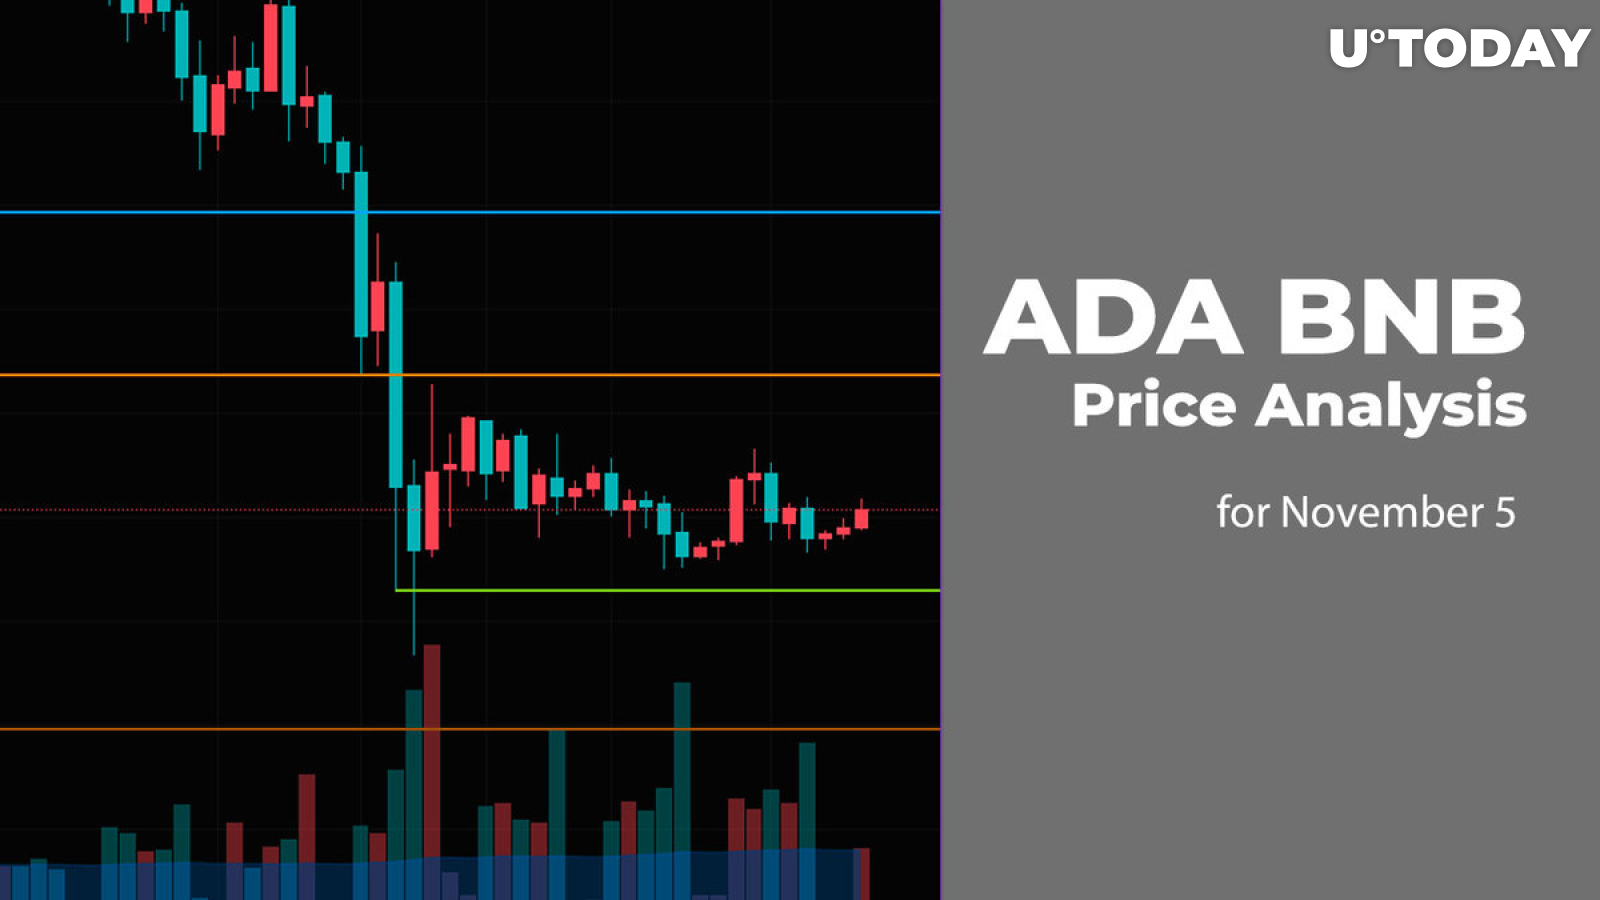 ADA and BNB Price Analysis for November 5